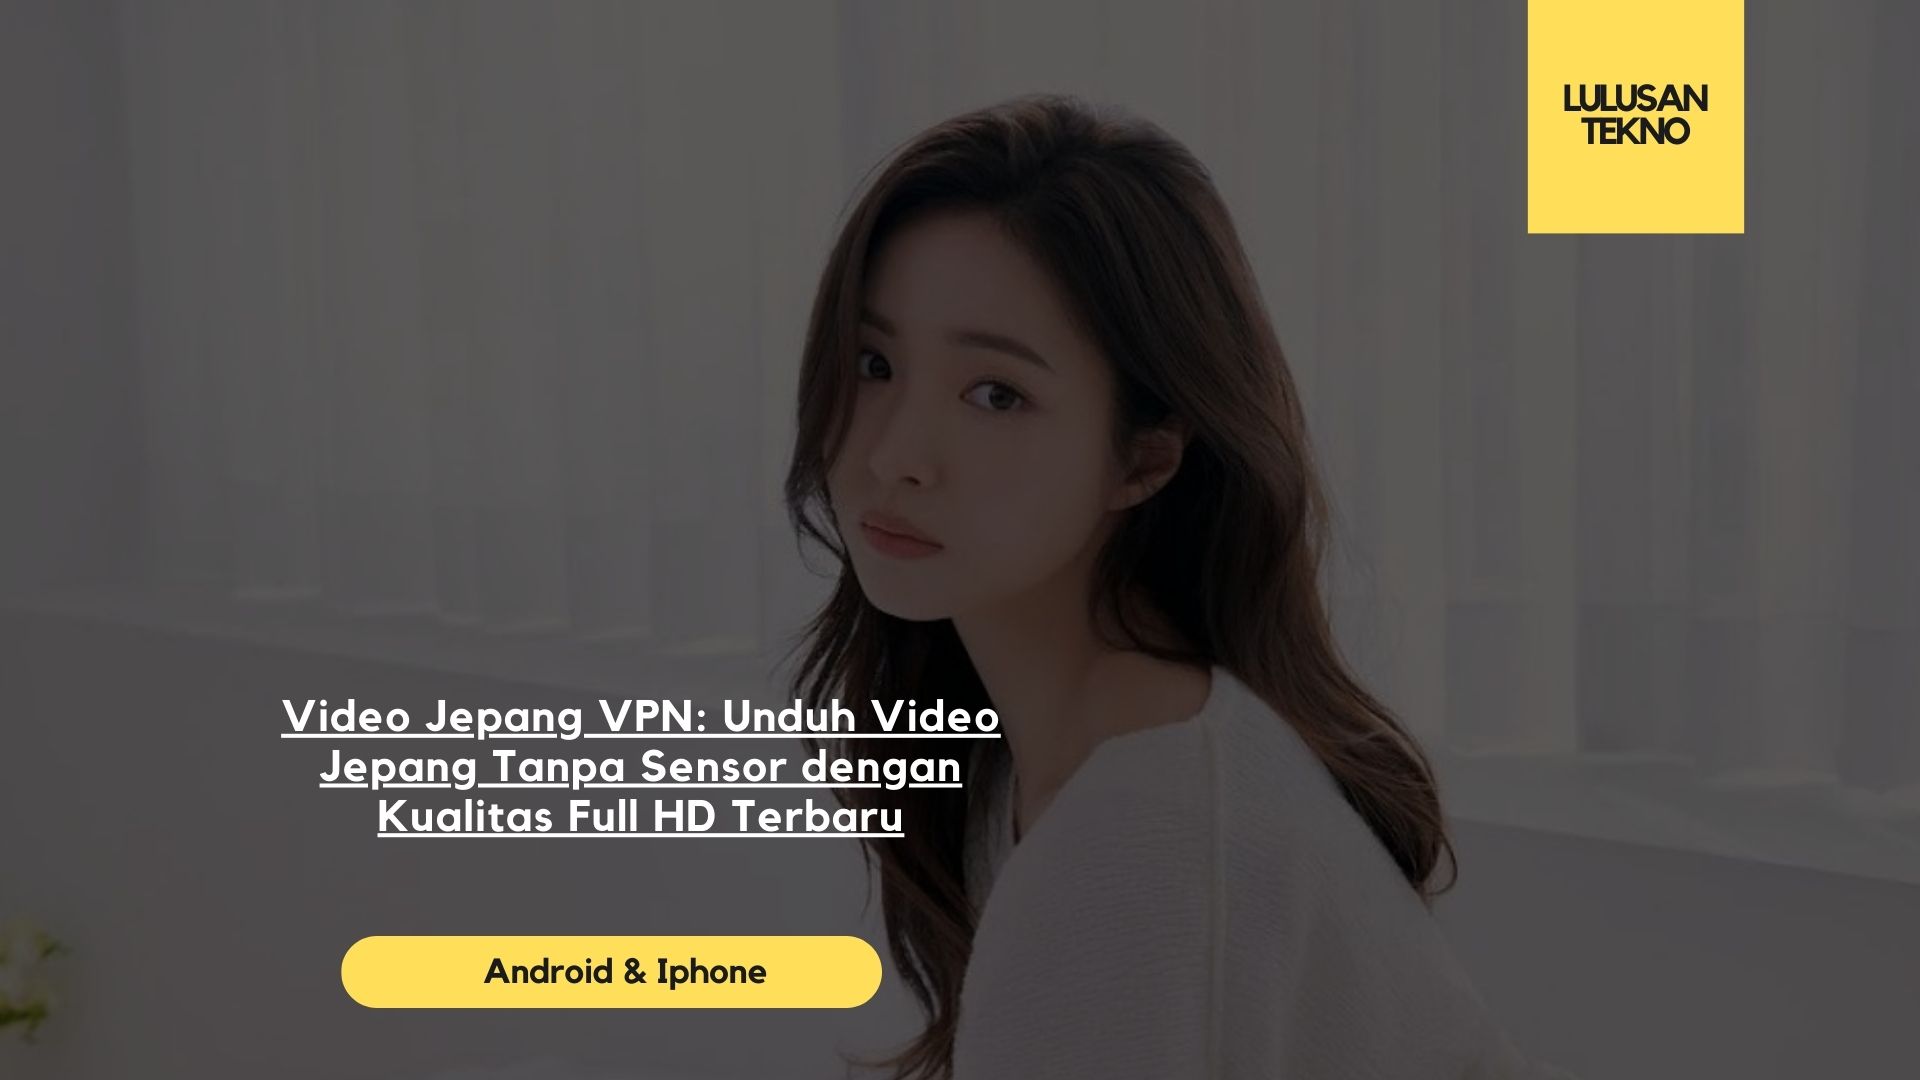 Video Jepang VPN: Unduh Video Jepang Tanpa Sensor dengan Kualitas Full HD Terbaru